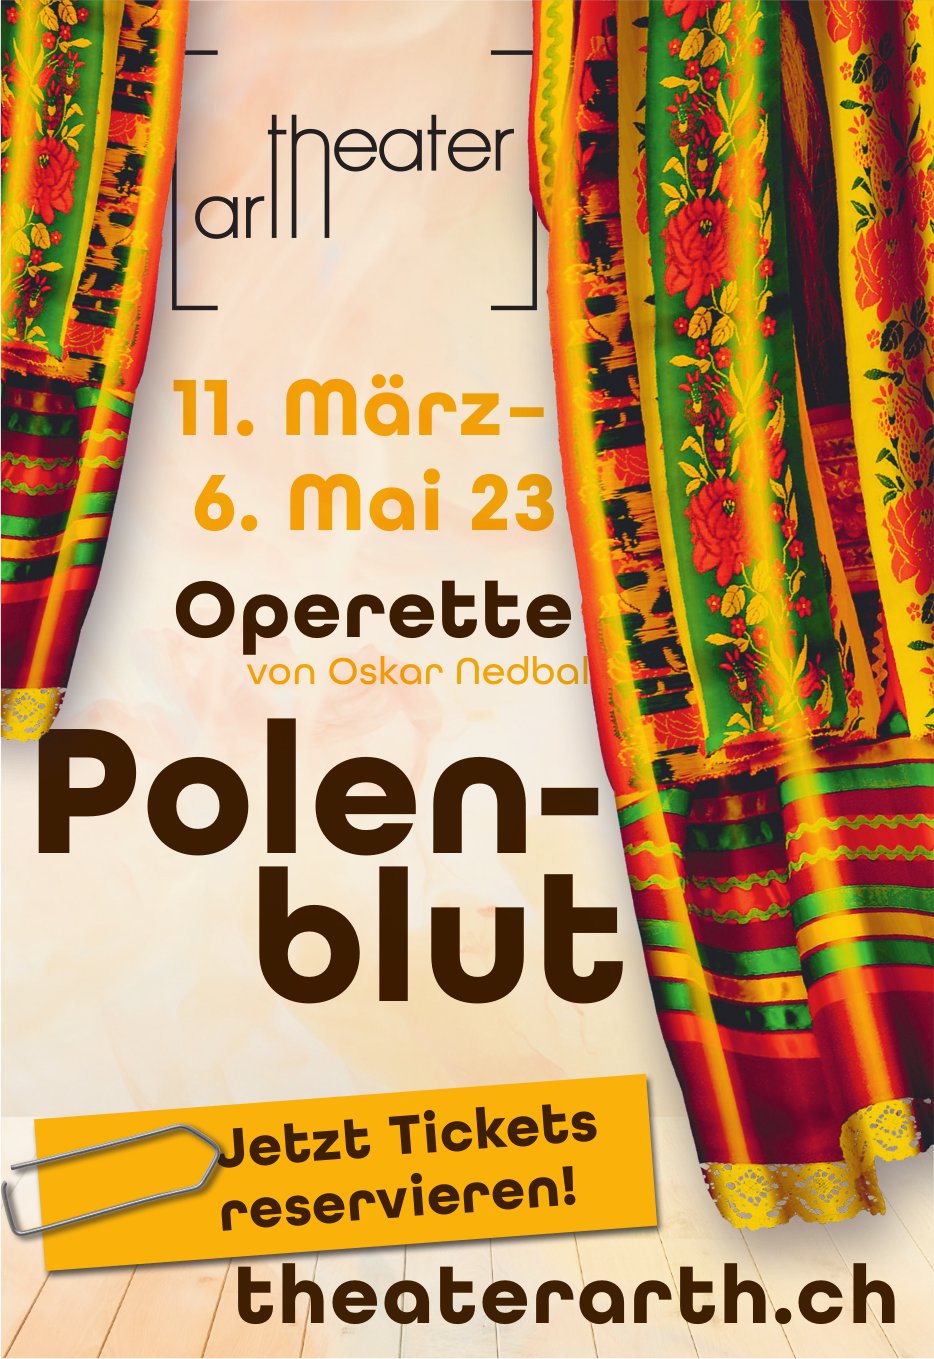 Polenblut, Operette von Oskar Medbal, 11. März bis 6. Mai, Theater, Arth